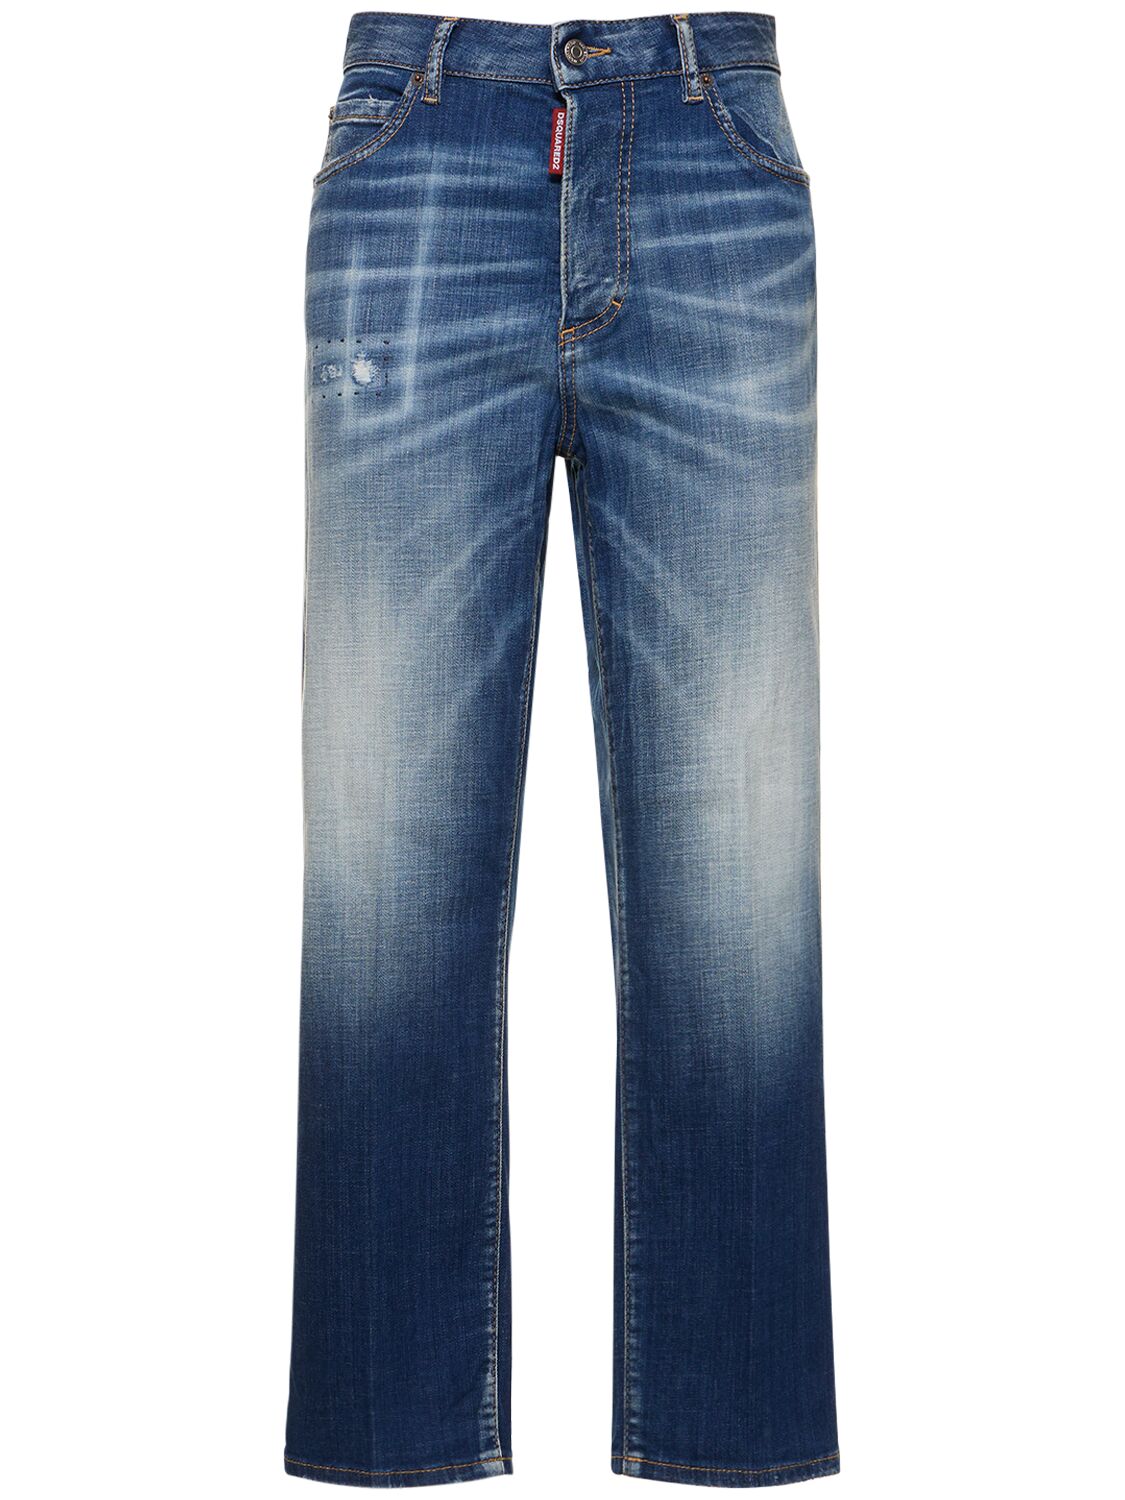 Boston Denim High Rise Crop Jeans